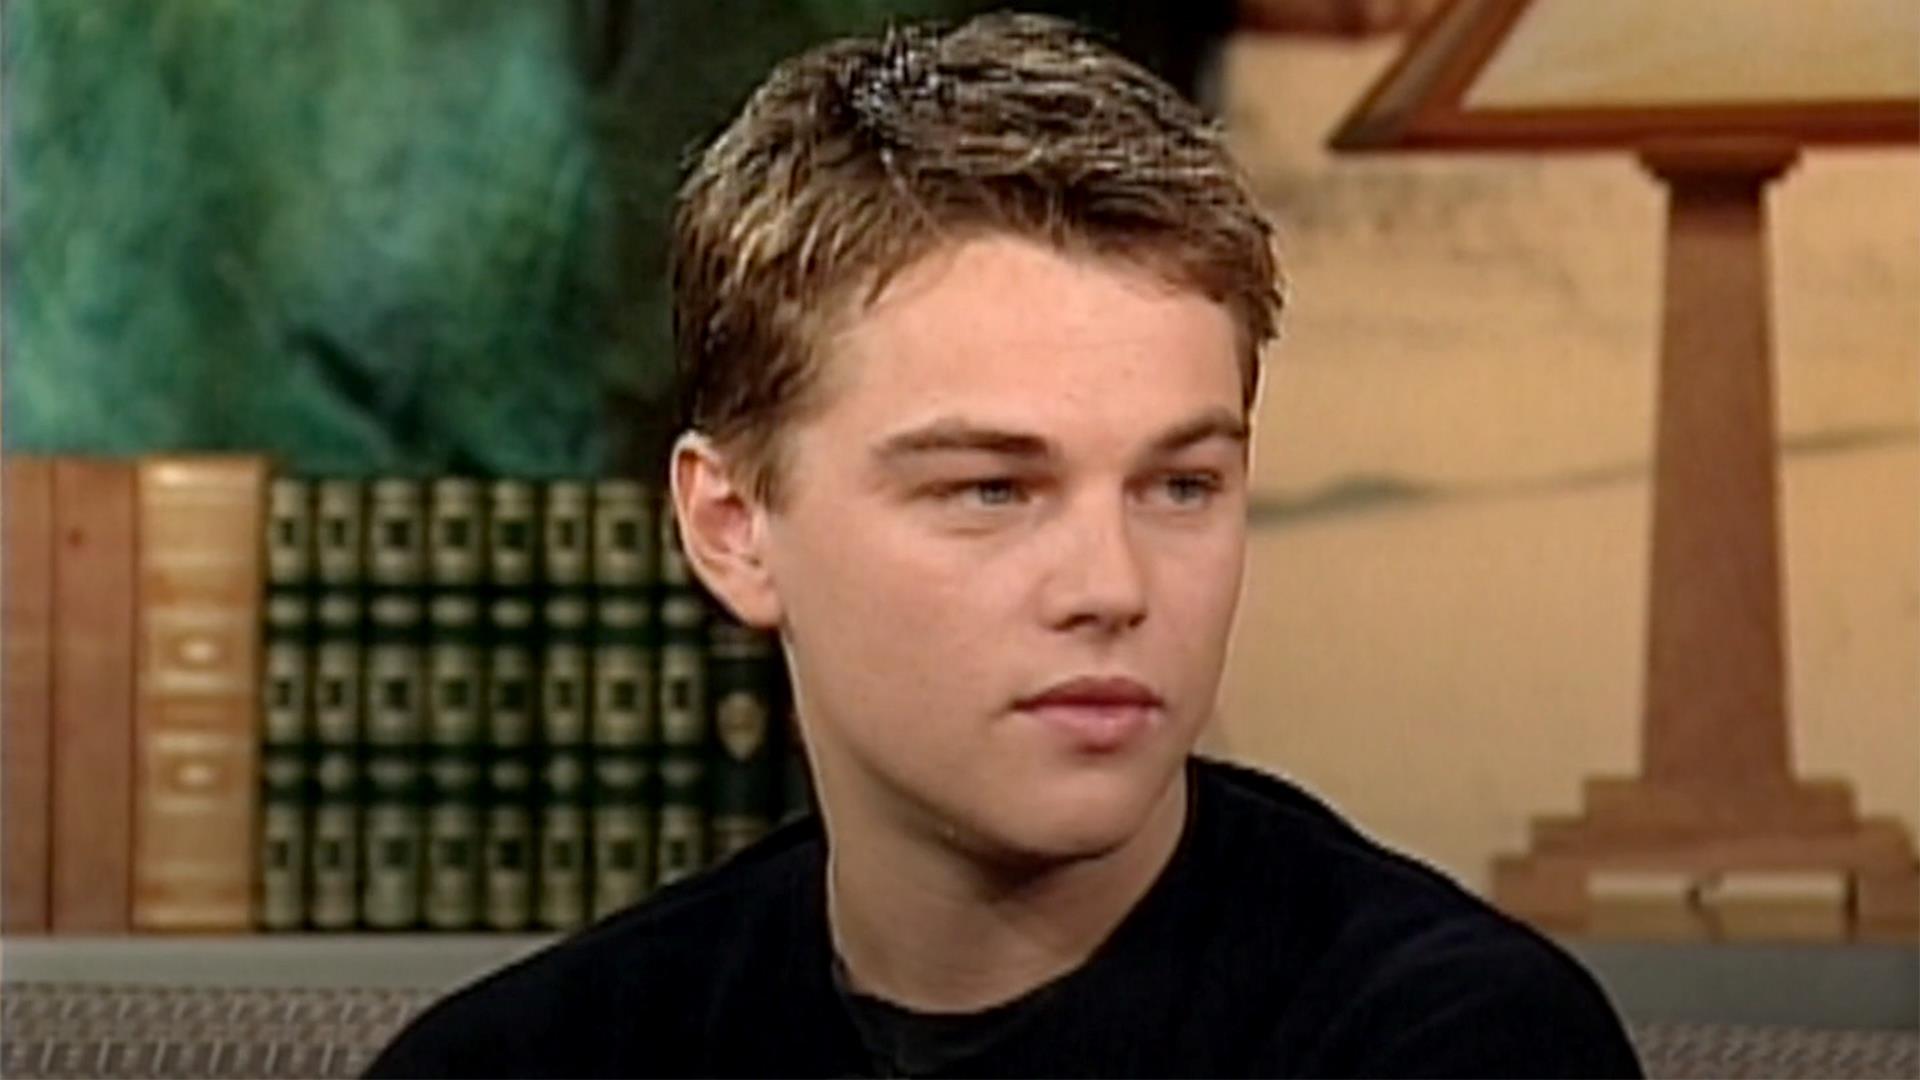 See Leonardo DiCaprio's 1998 'Titanic' interview with Katie Couric